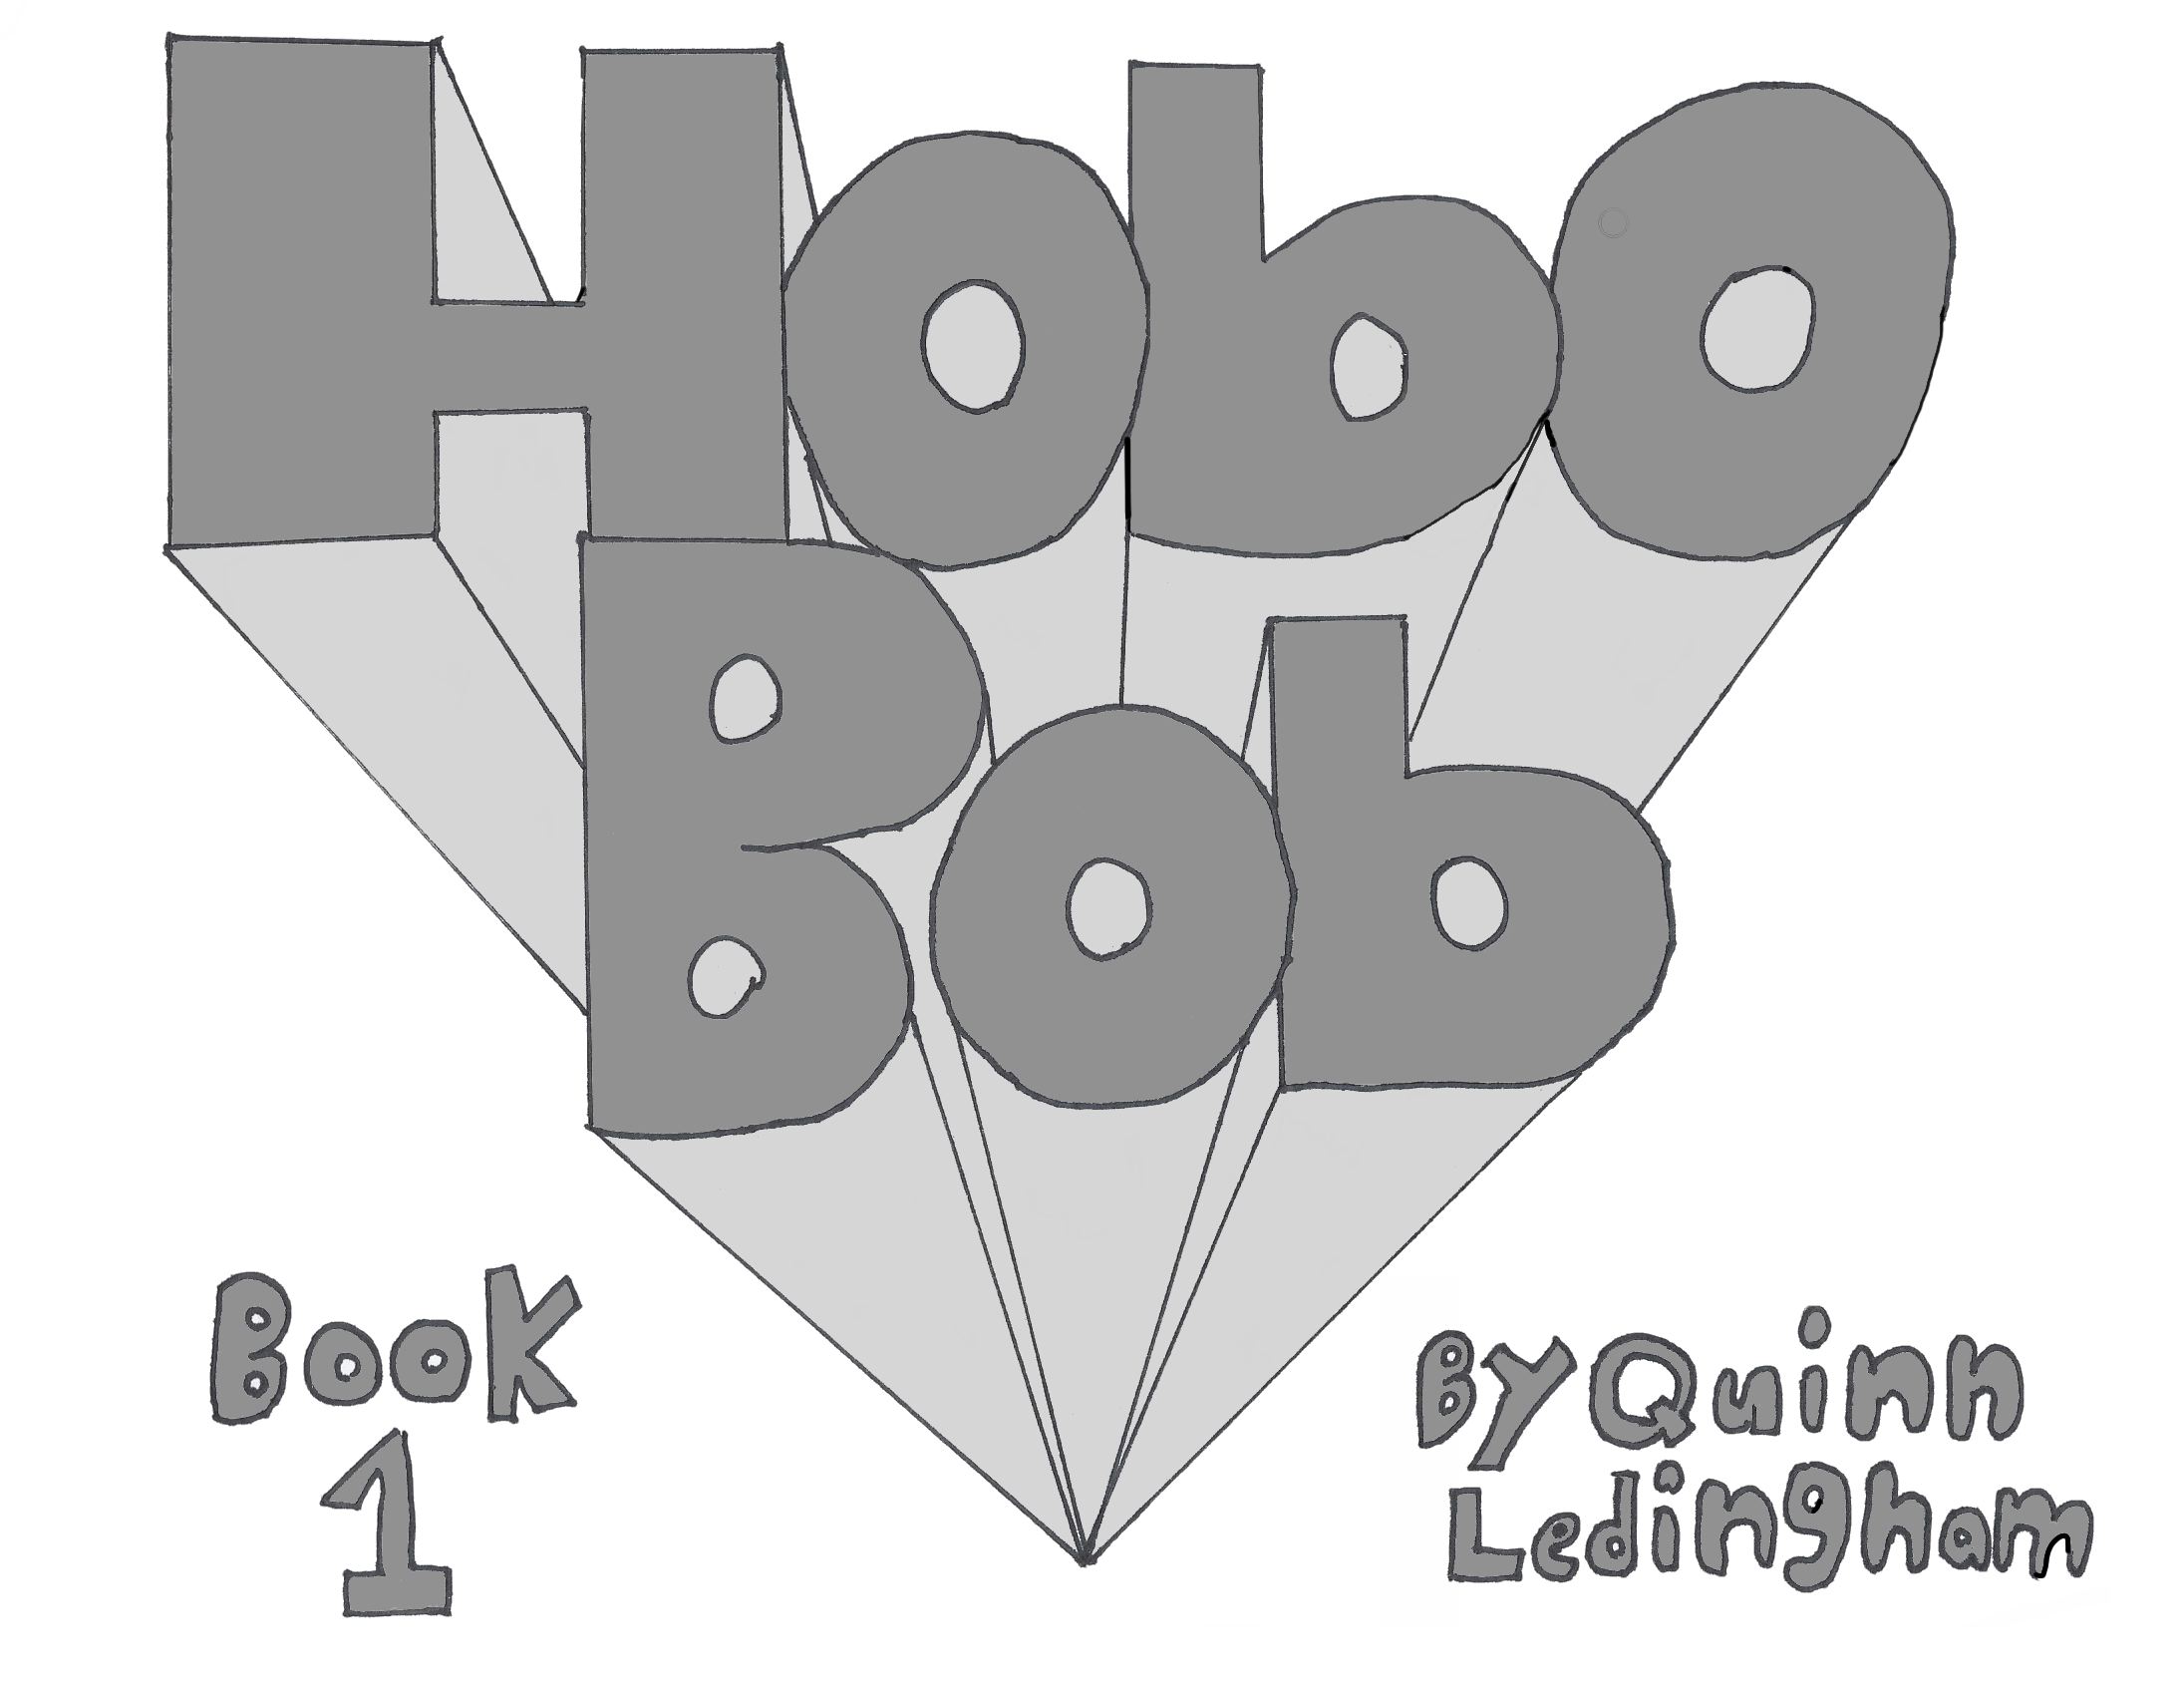 Hobo bob book title 1